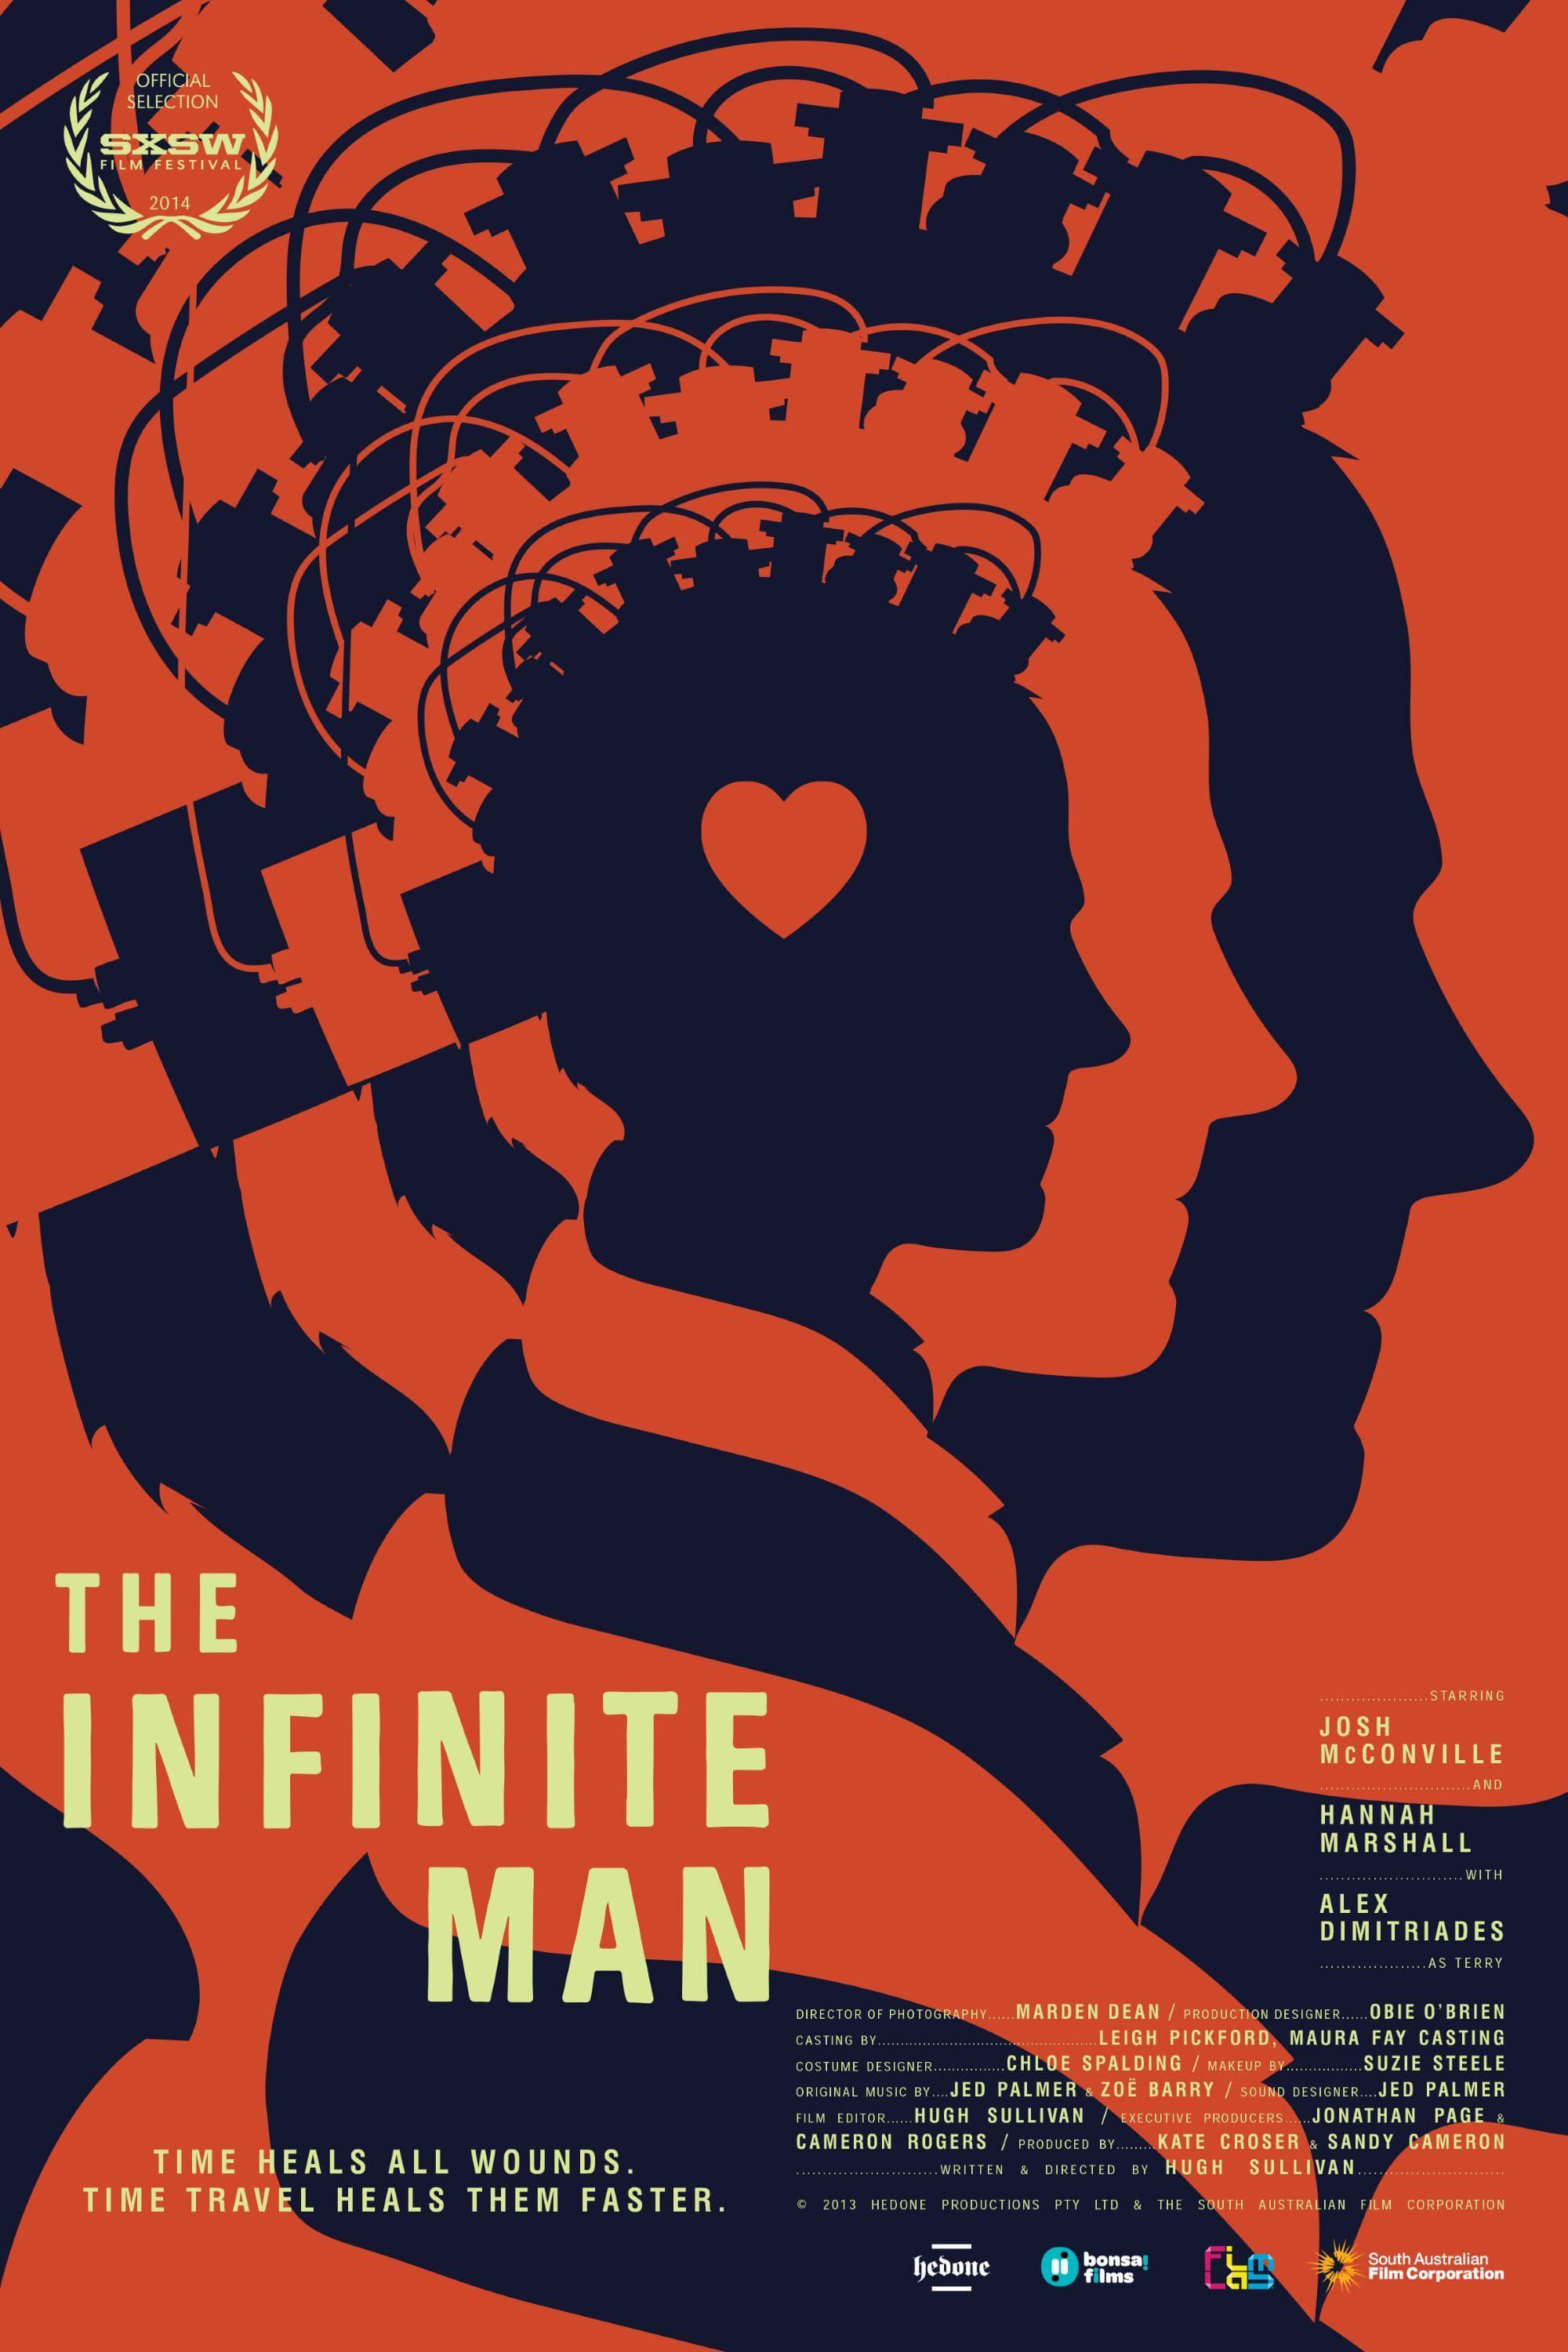 The Infinite Man poster